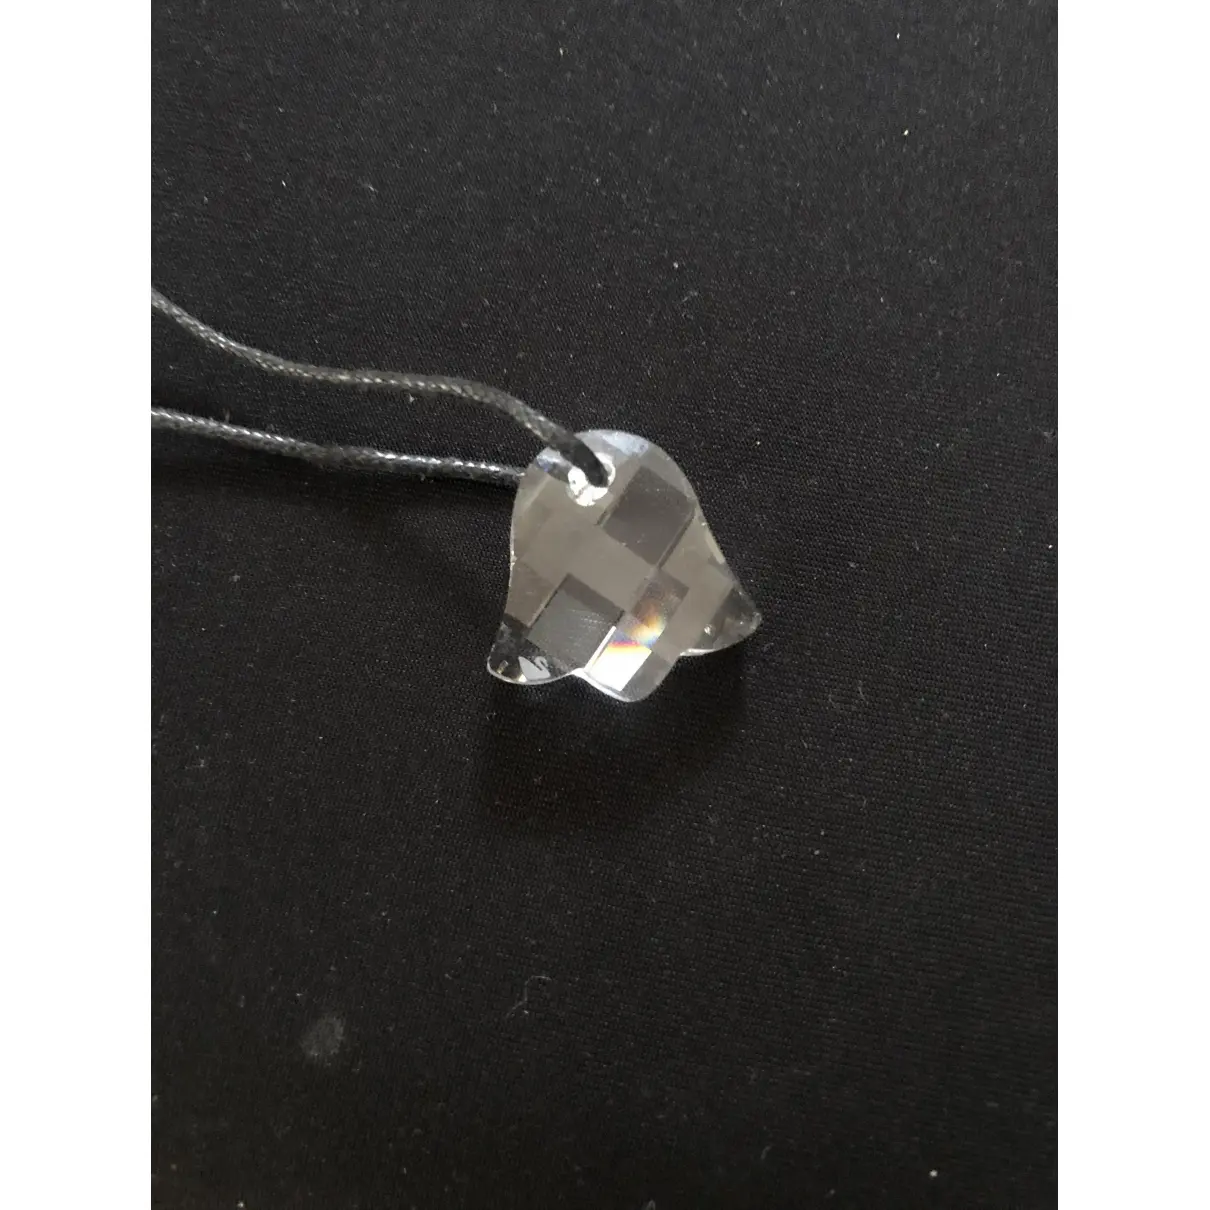 Buy Swarovski Crystal pendant online